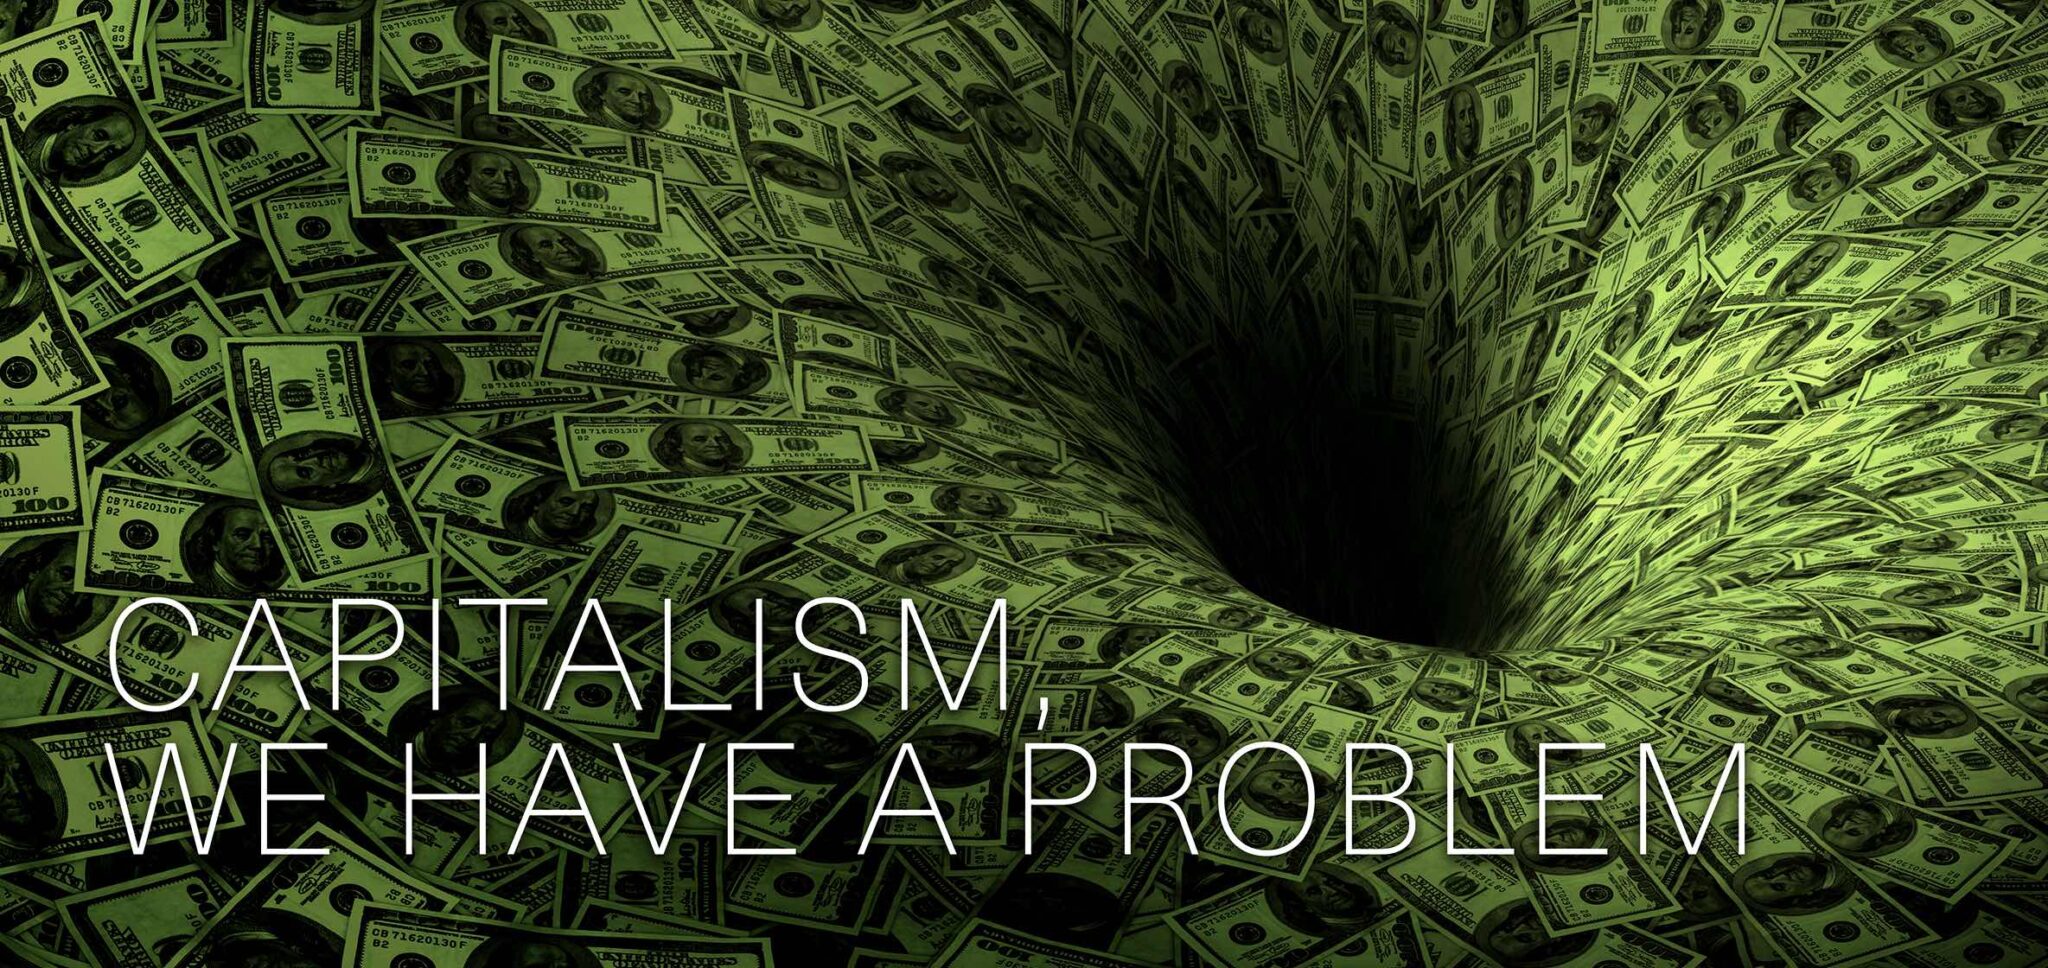 capitalism-we-have-a-problem-simon-hertnon-s-simple-philosophy